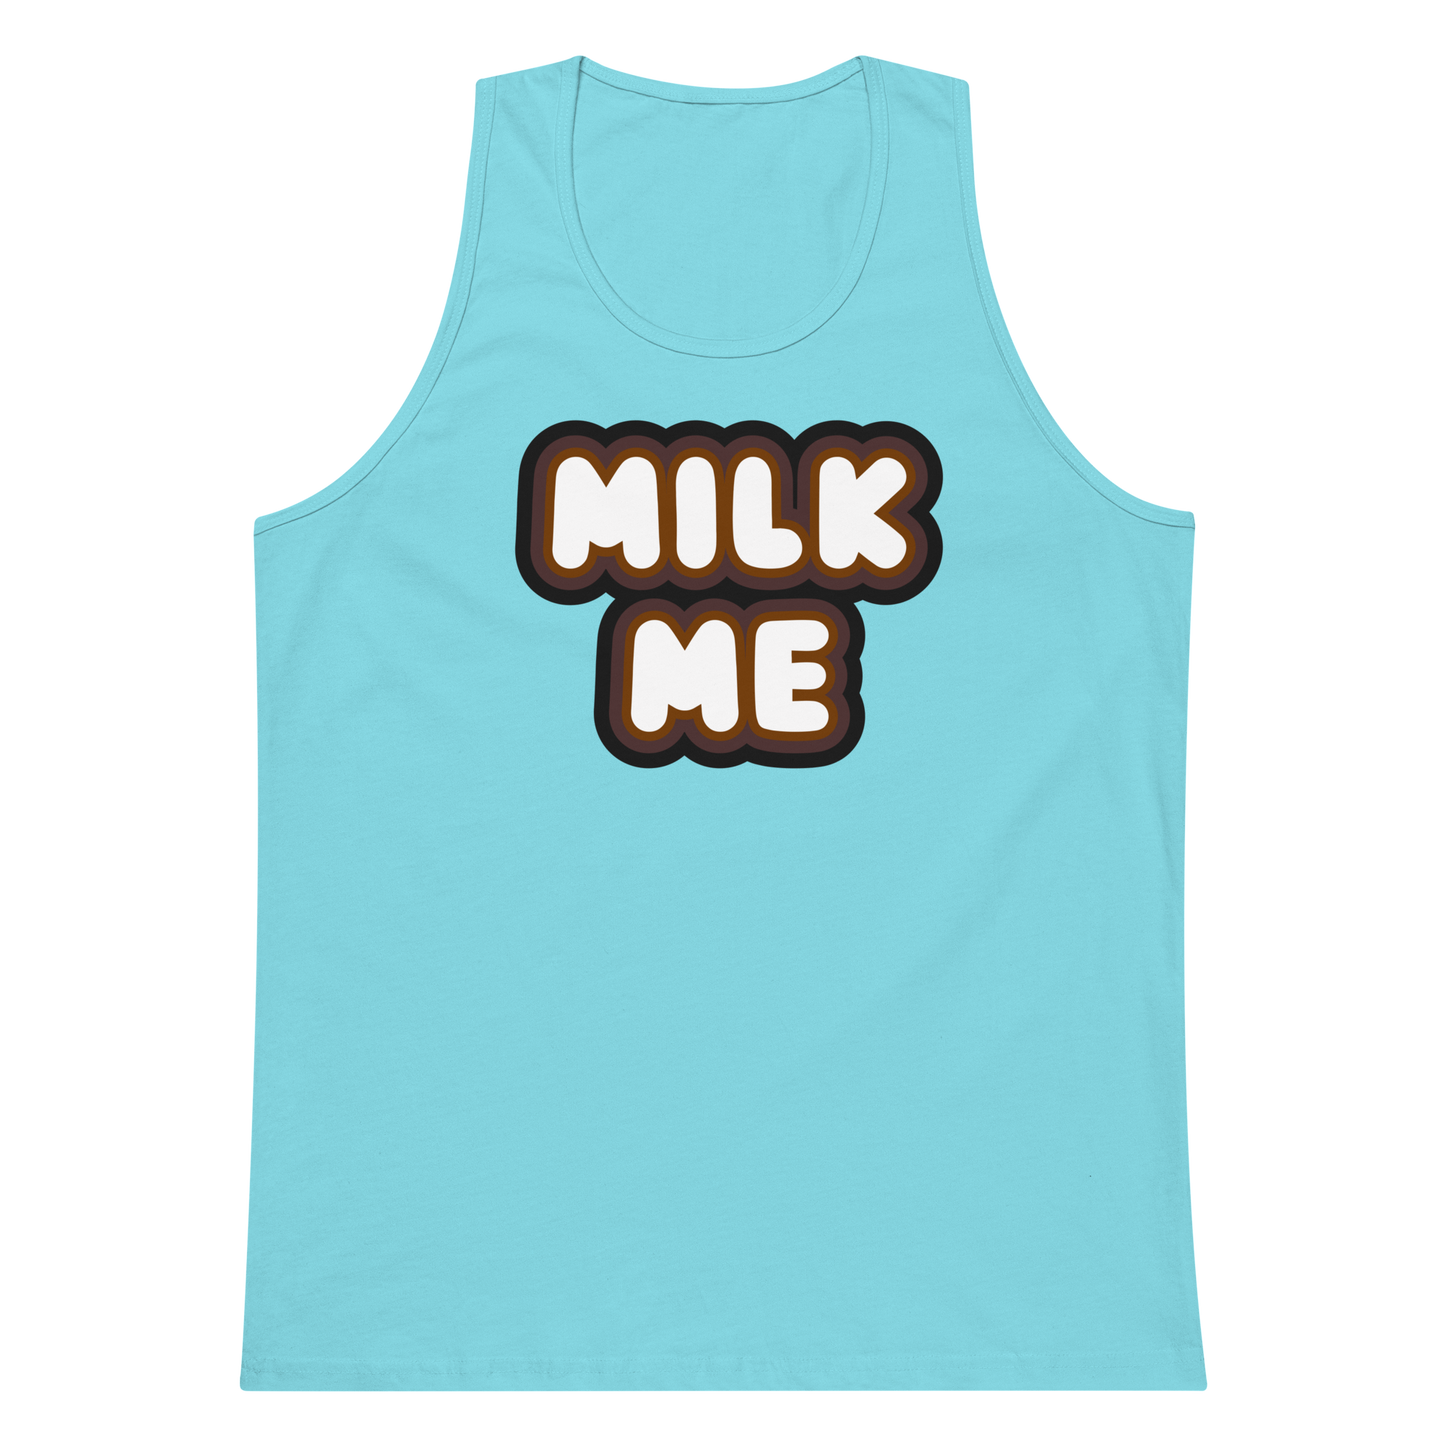 Milk Me Tank